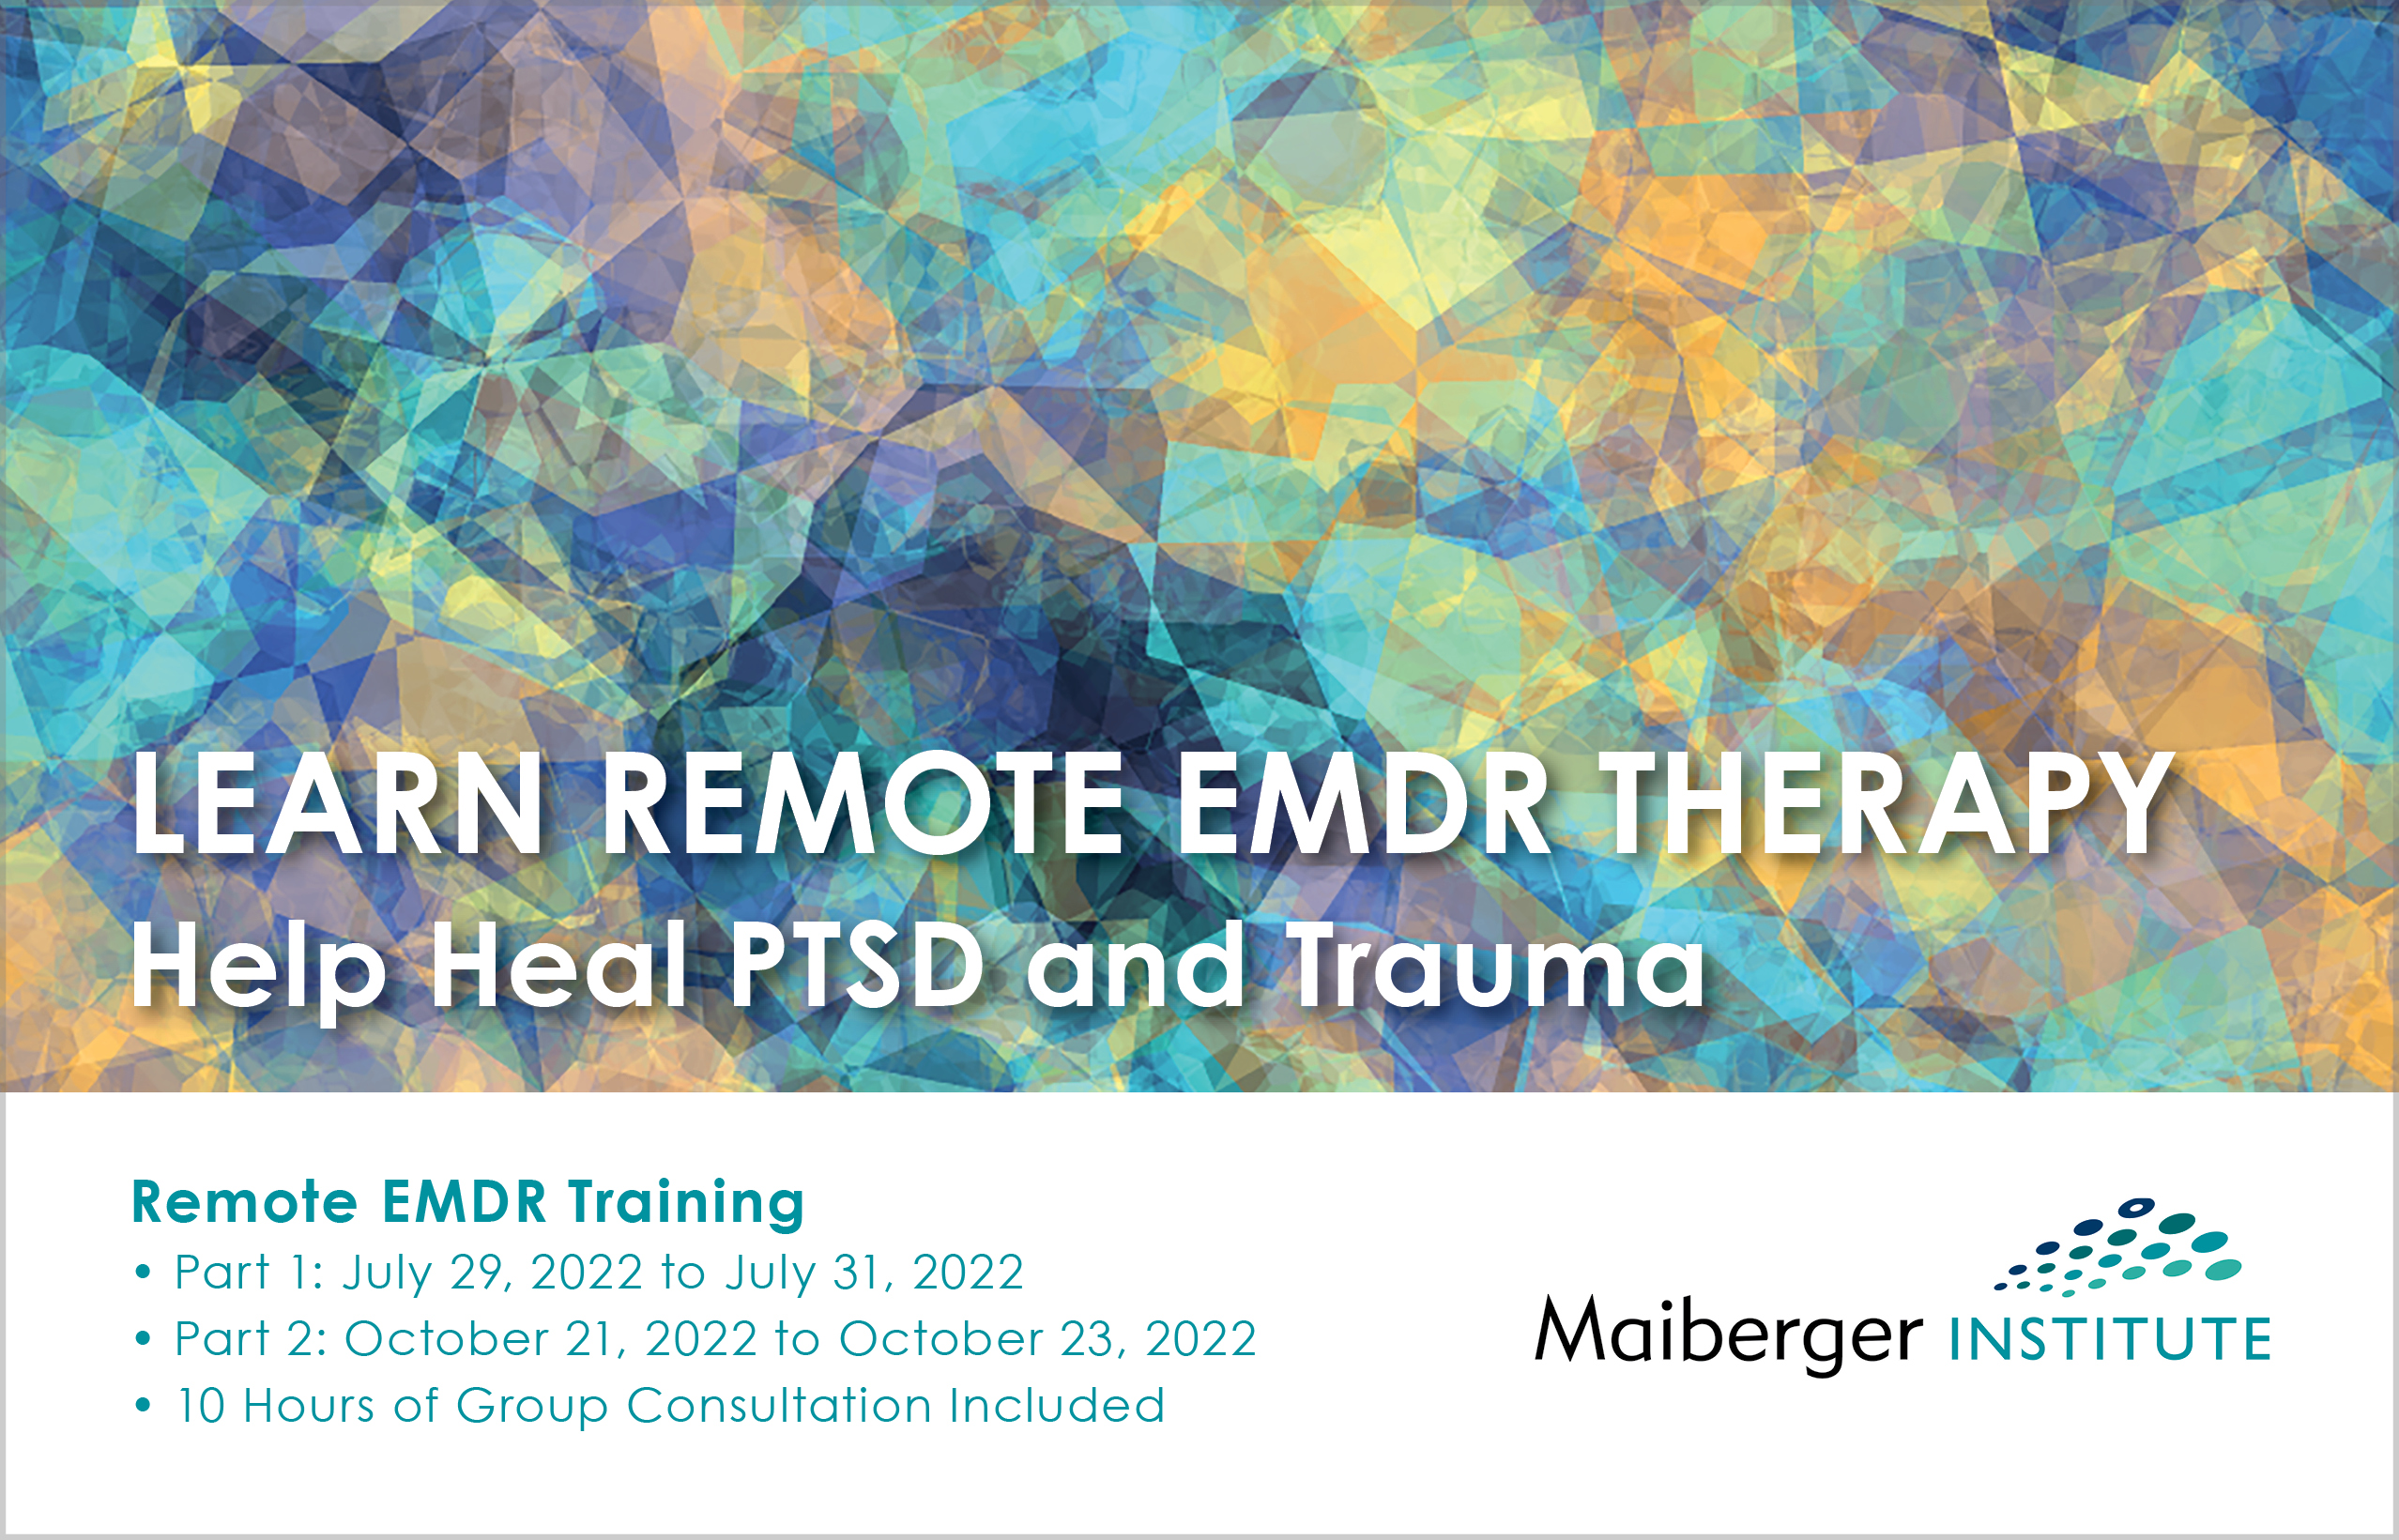 Remote EMDR Training - July 2022 and October 2022 - MAIBERGER INSTITUTE - EMDR TRAINING SCHEDULE